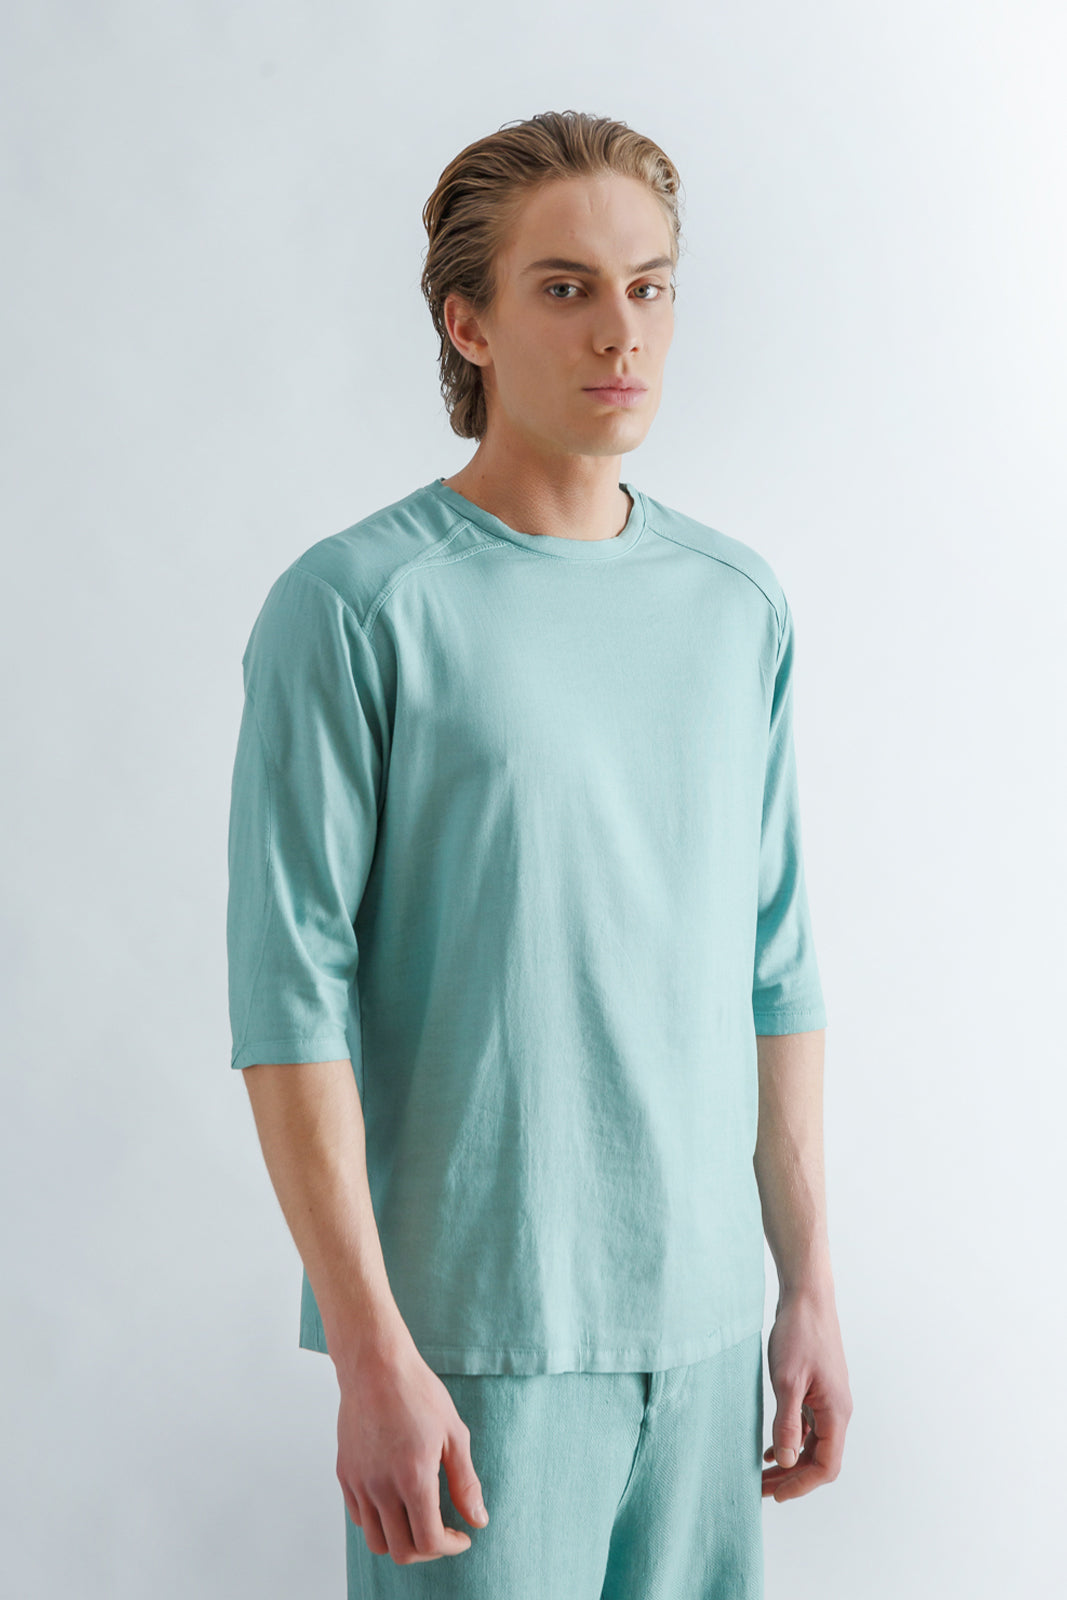 T-shirt with Raglan 3/4 Sleeves